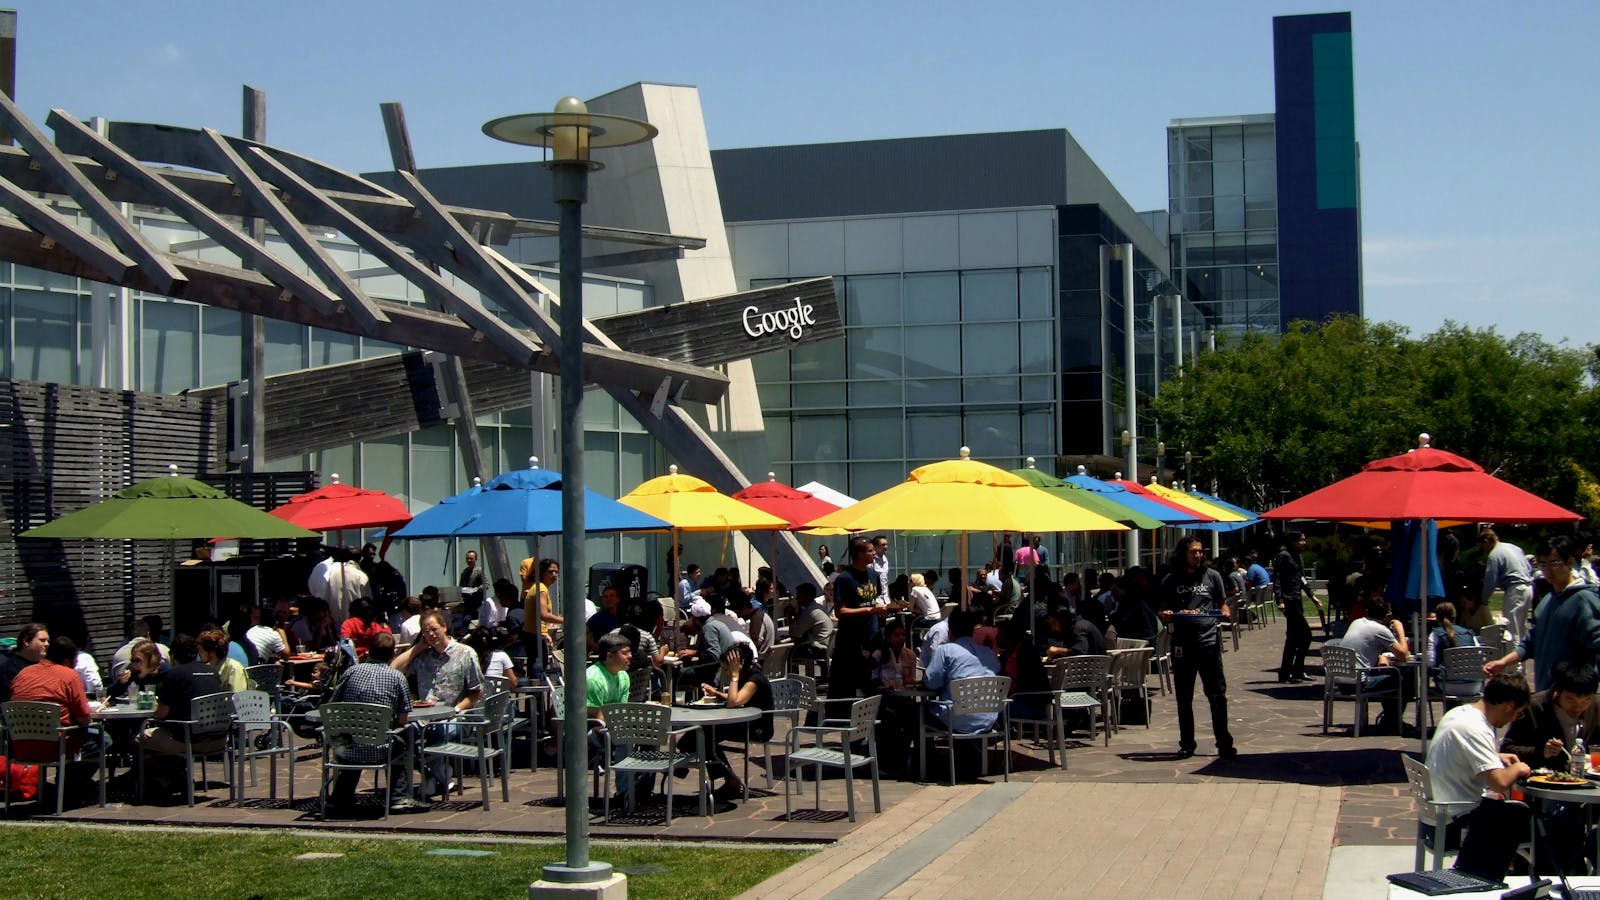 Google's campus. Photo by Flickr/Fotinakis.